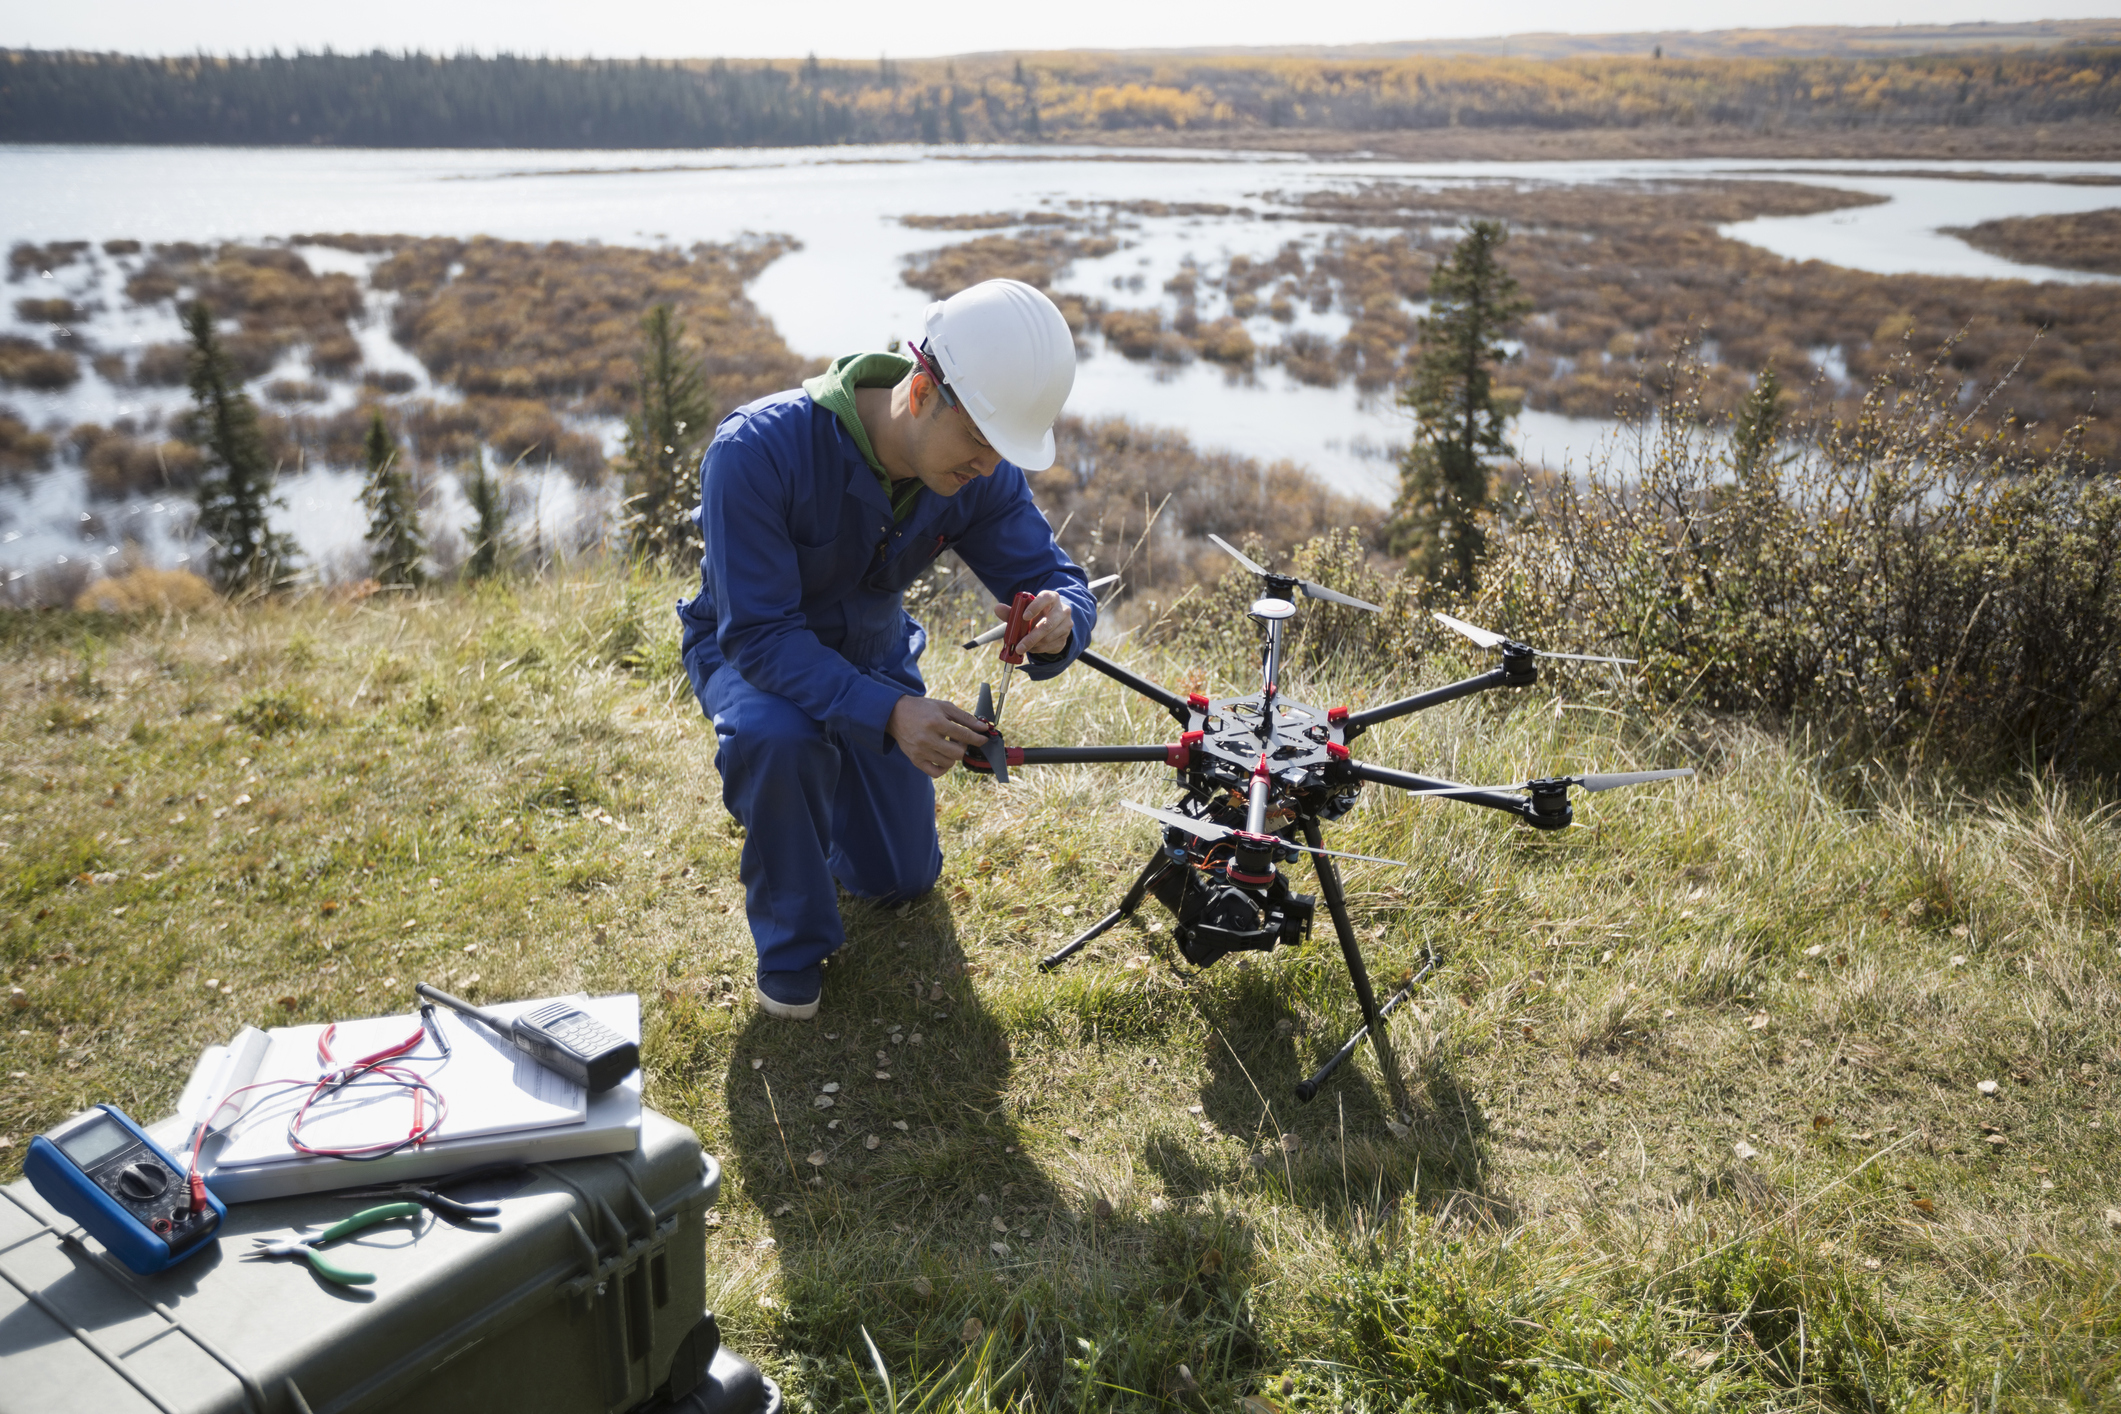 Surveyor repairing drone equipment on hilltop overlooking lake